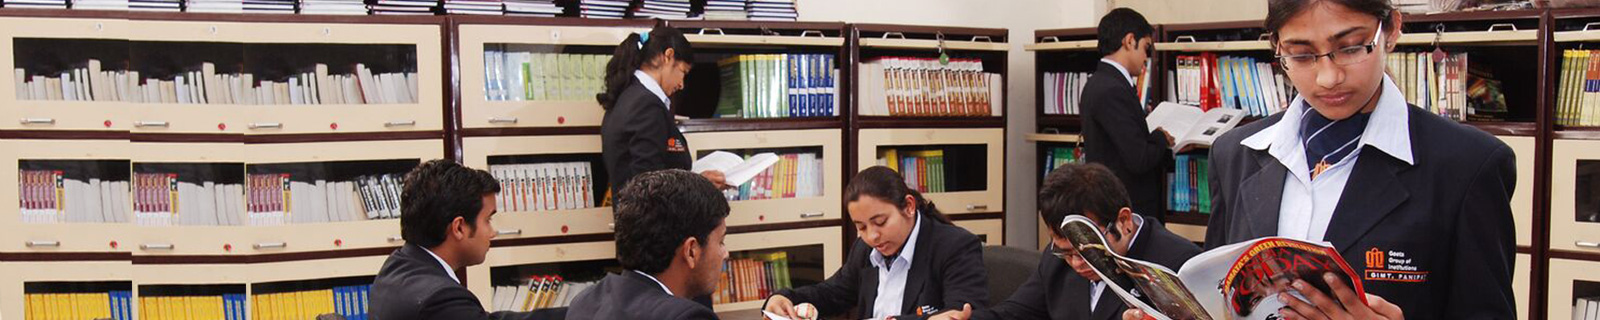 Library - Geeta Engineering College